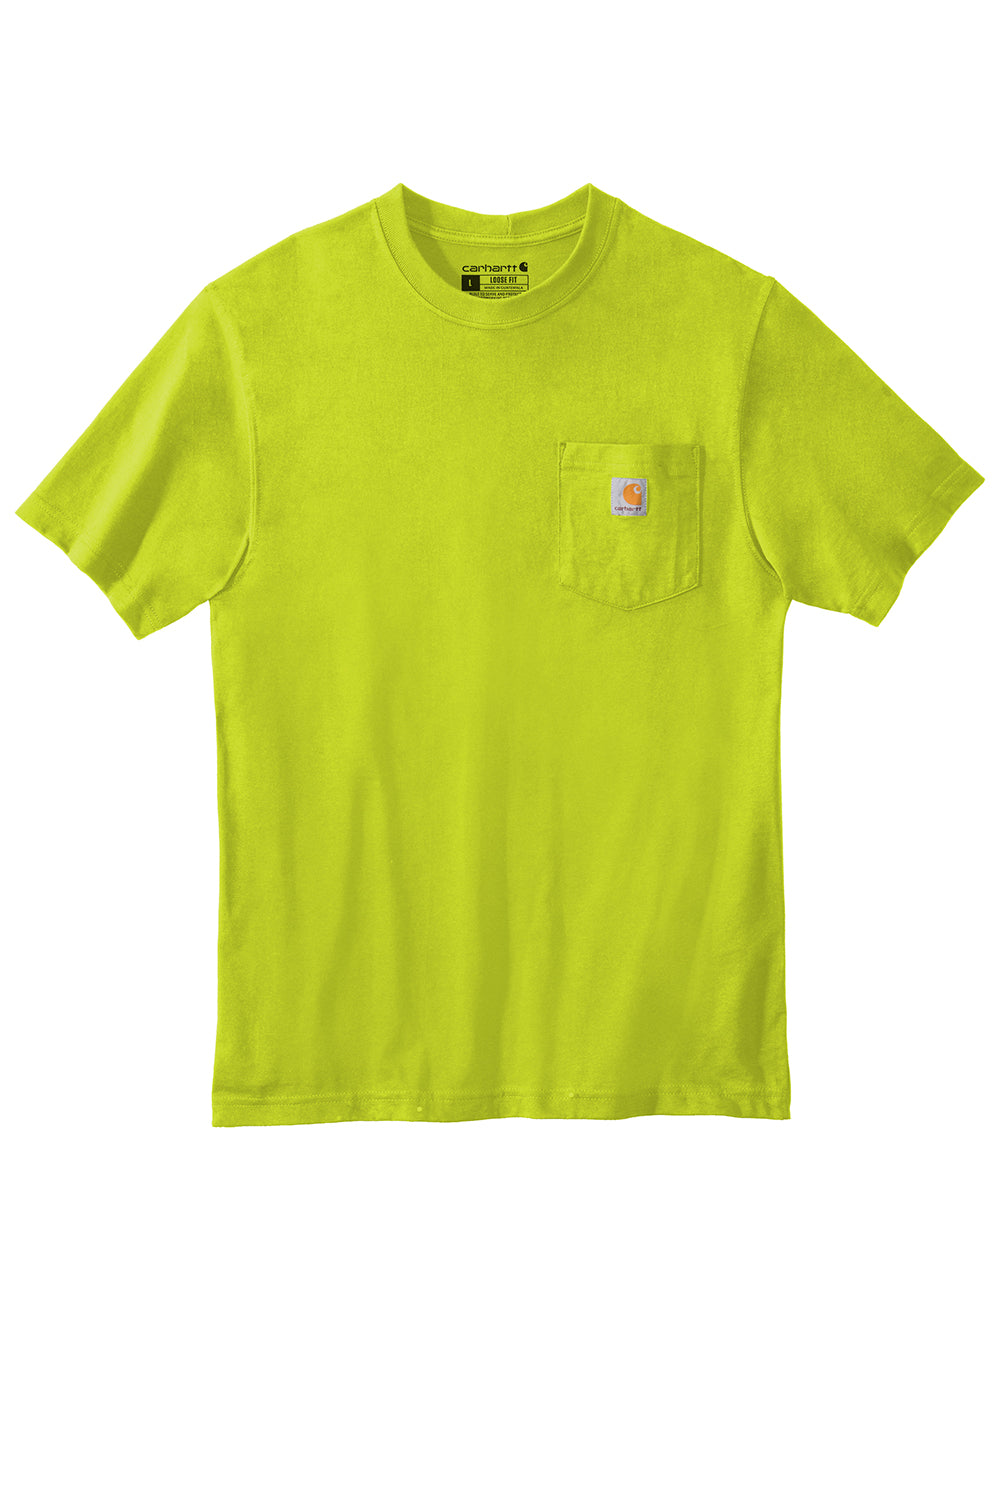 Carhartt CTK87/CTTK87 Mens Workwear Short Sleeve Crewneck T-Shirt w/ Pocket Brite Lime Green Flat Front